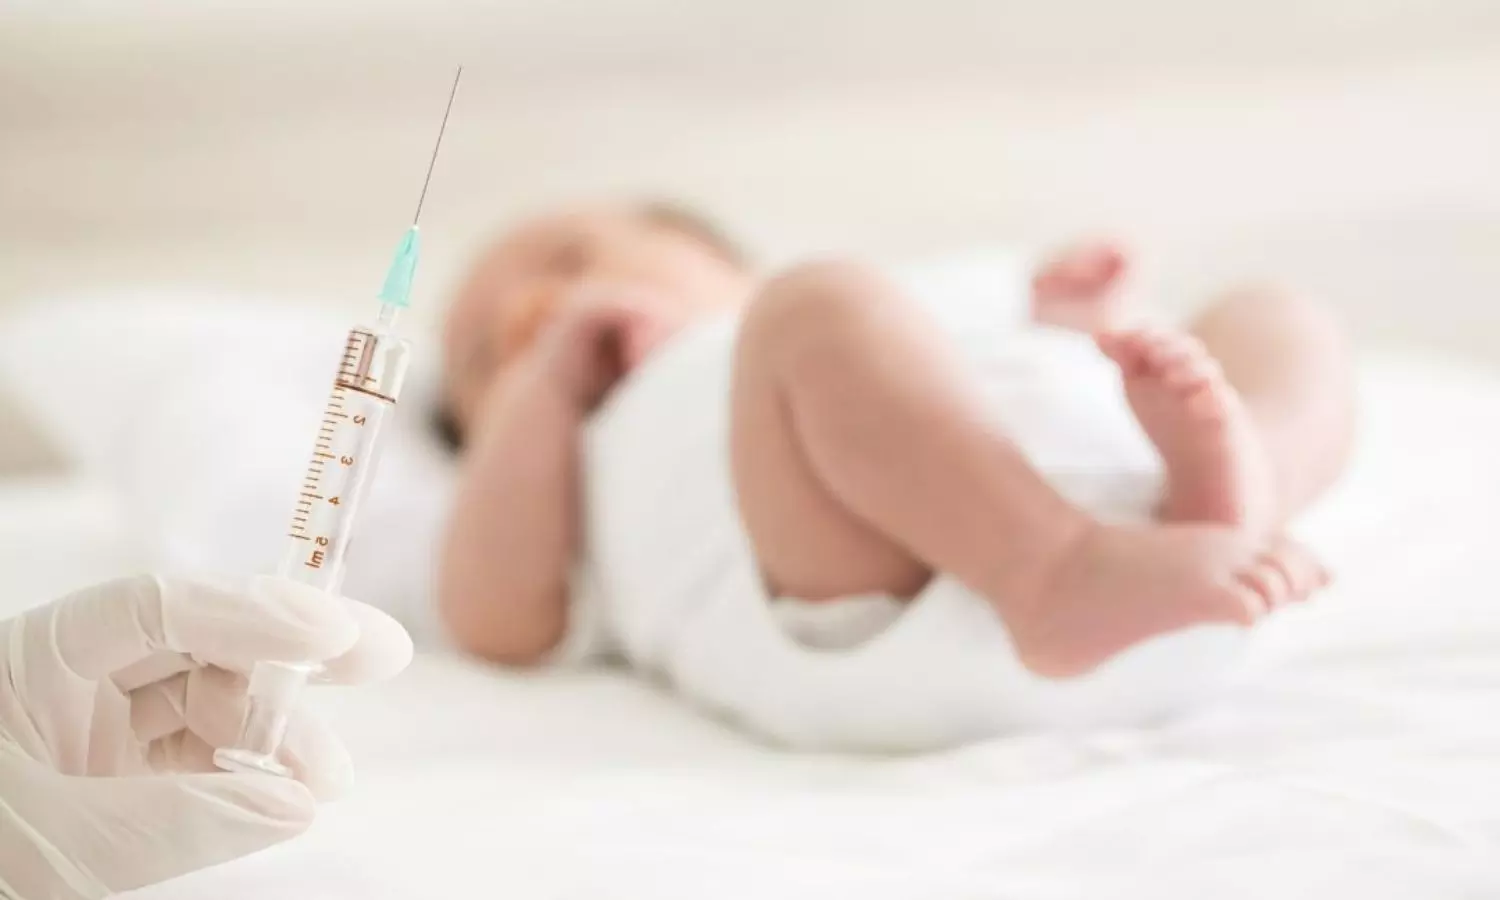 AAP emphasizes need of Vitamin K for newborns amid rising parental refusal